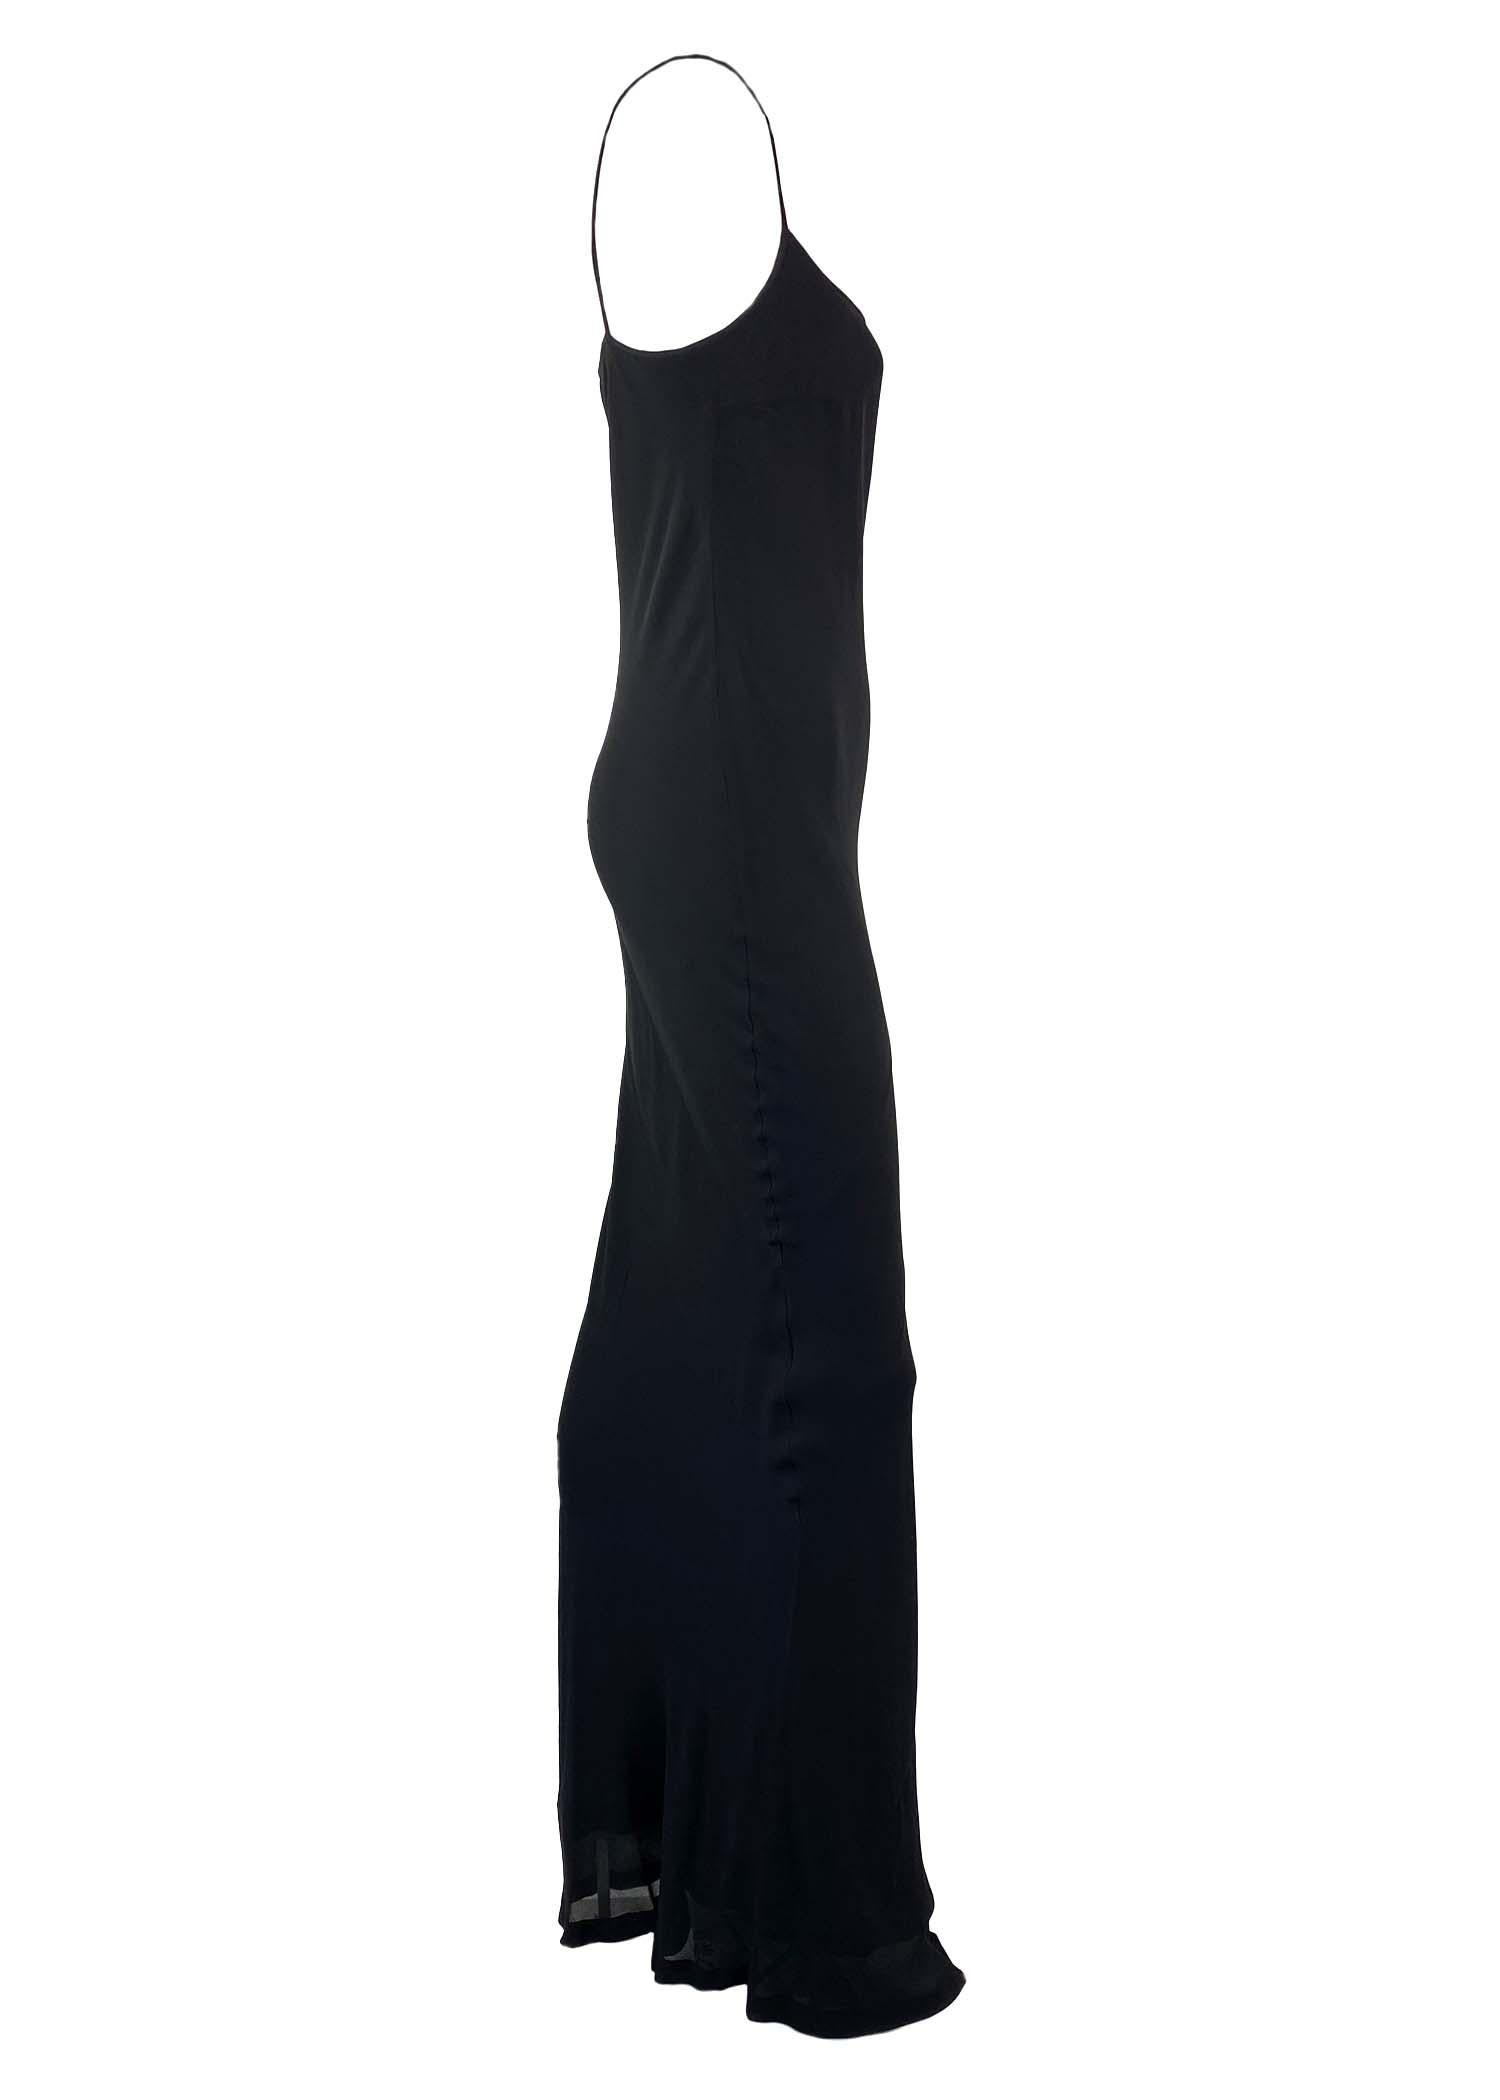 S/S 1997 Gucci by Tom Ford Black Diagonal Cut Sheer Silk Column Dress Slip For Sale 5